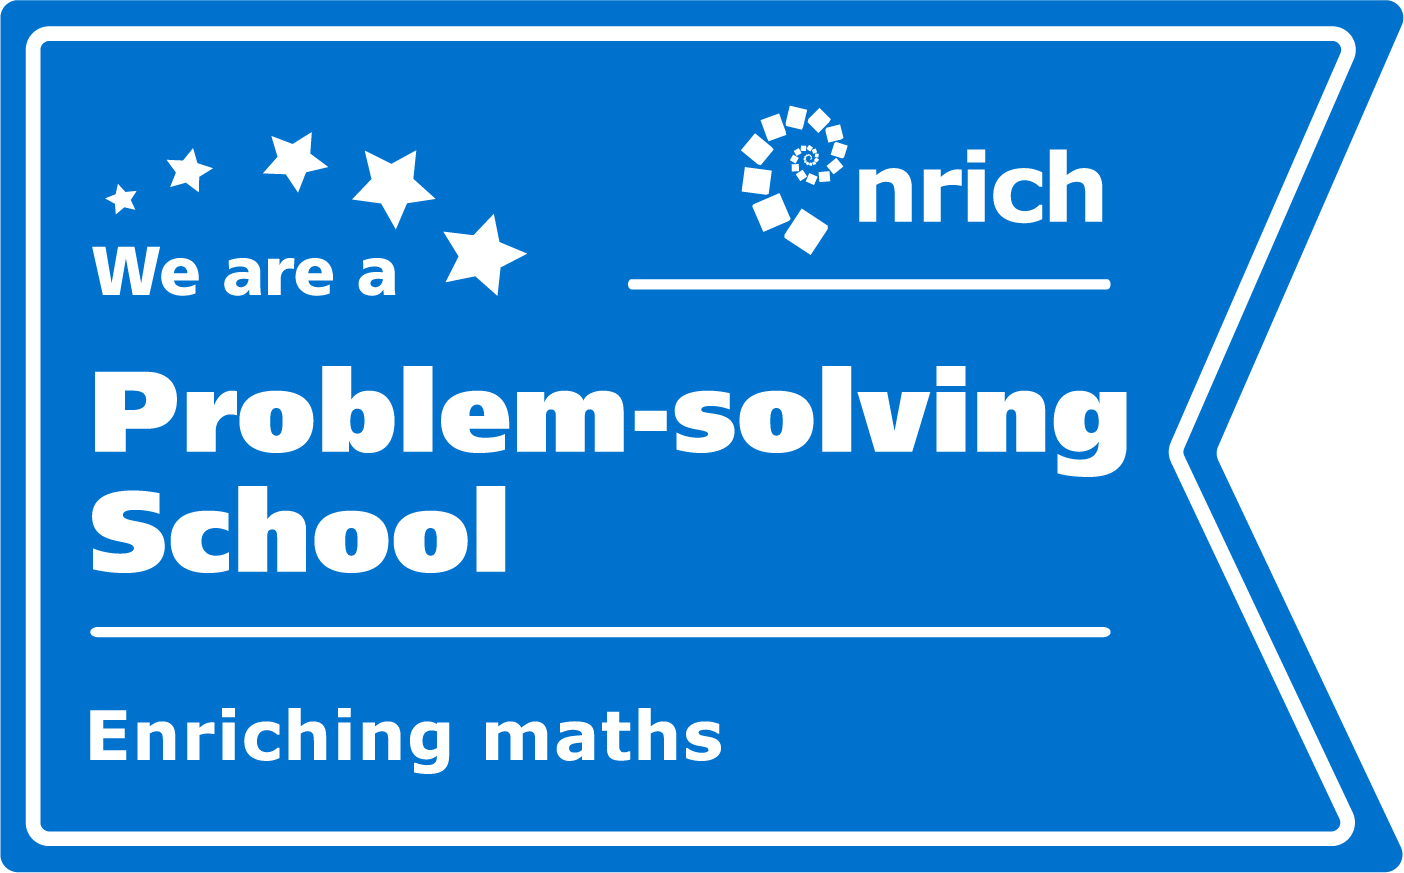 Problem-solving School